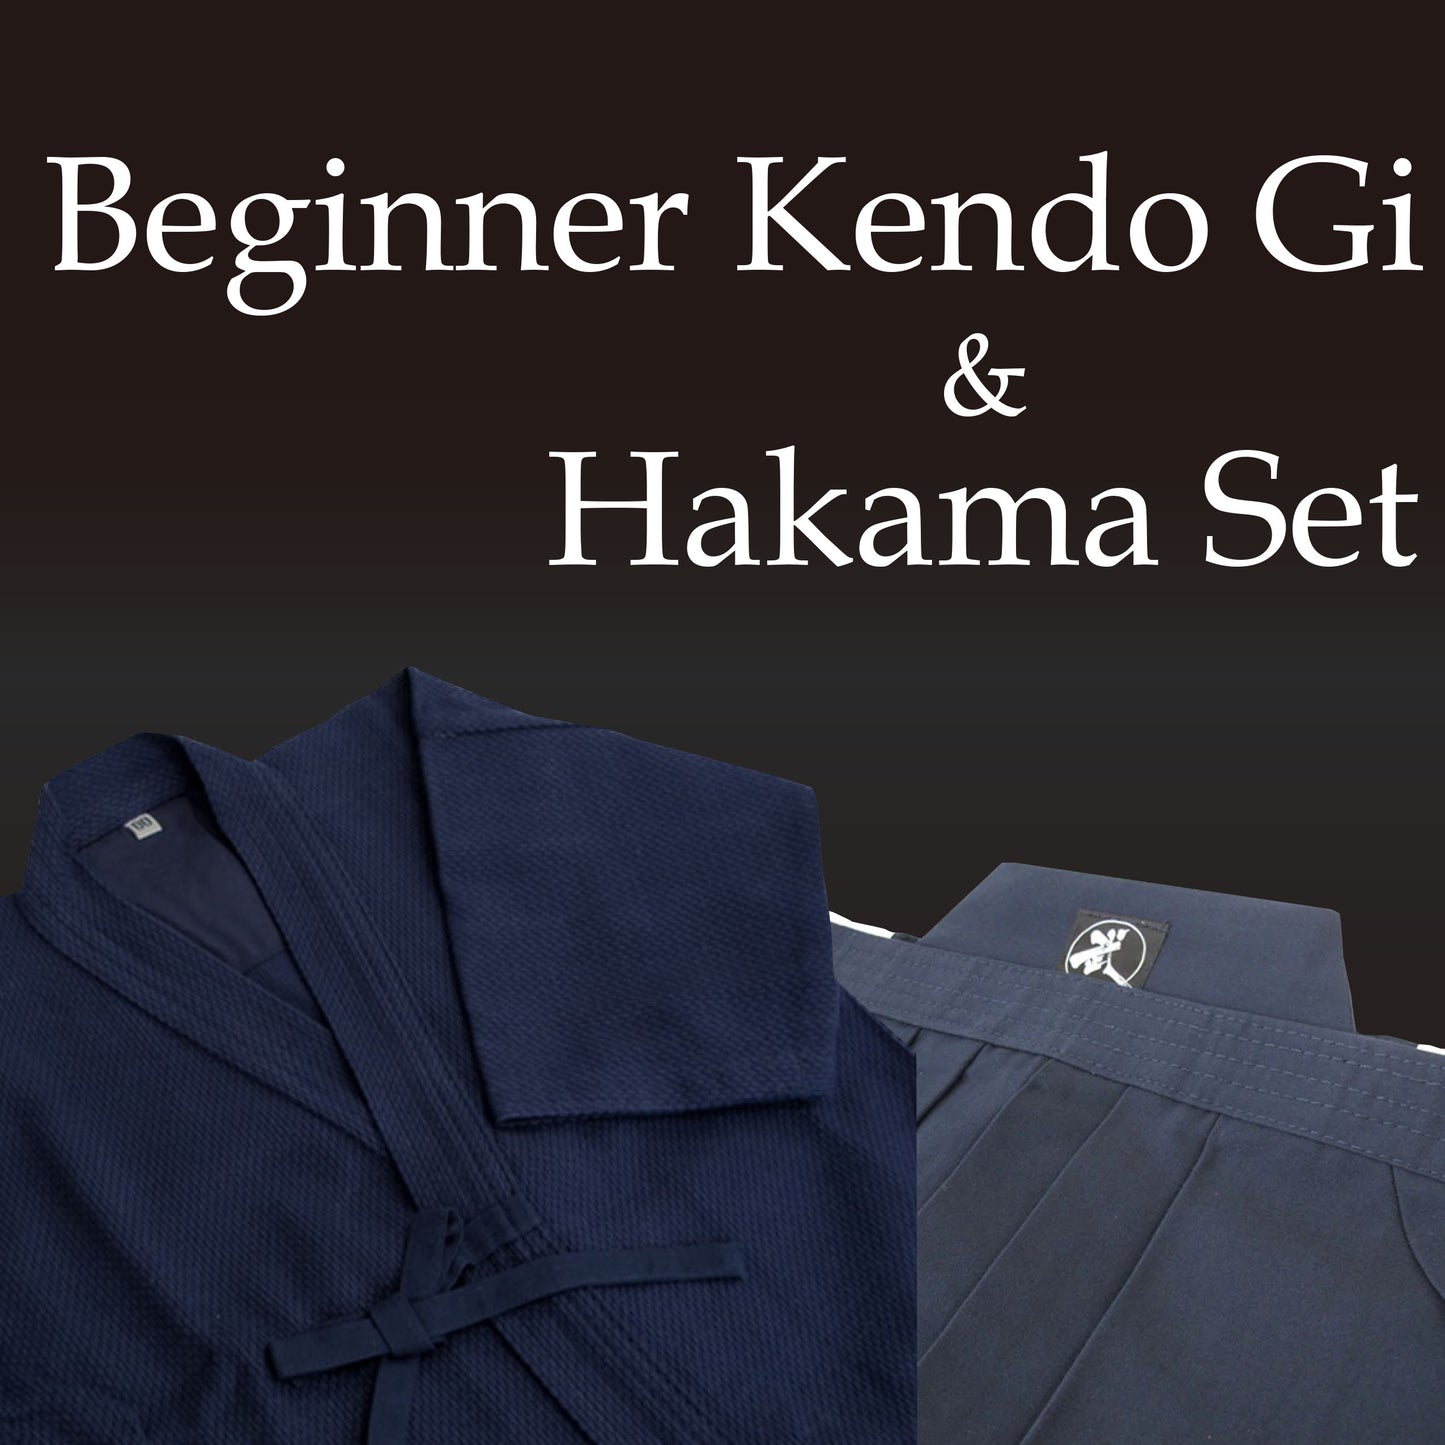 Beginner's Kendo Gi and Hakama Set